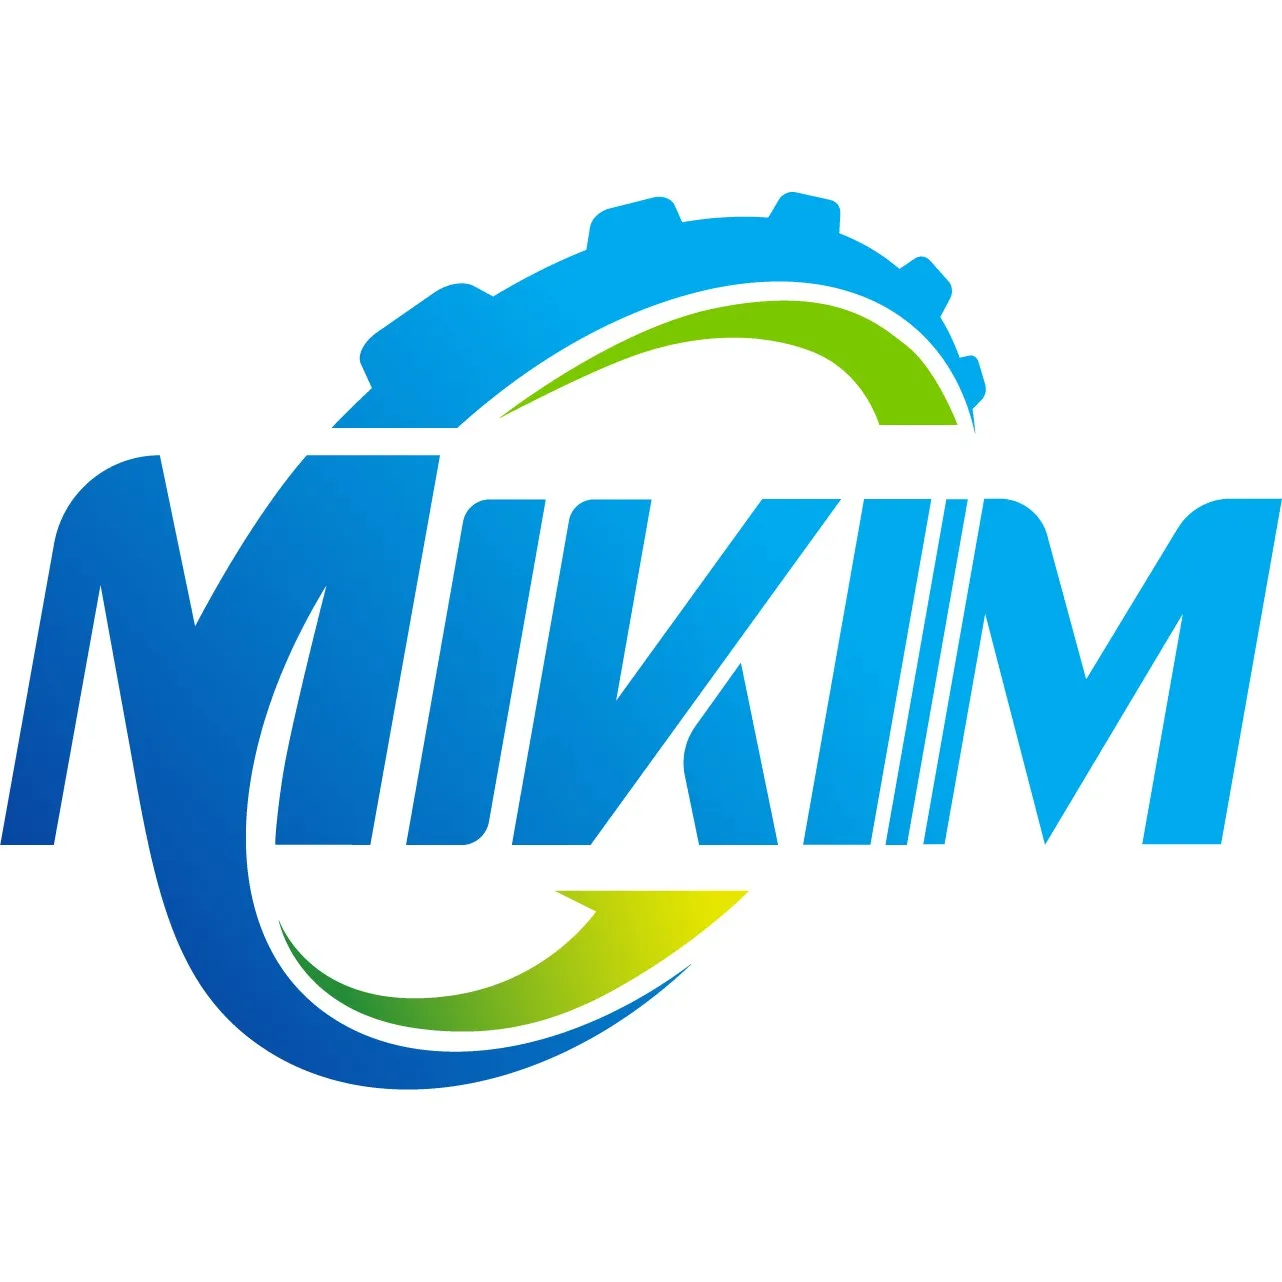 Tianjin Mikim Technique Co., Ltd.